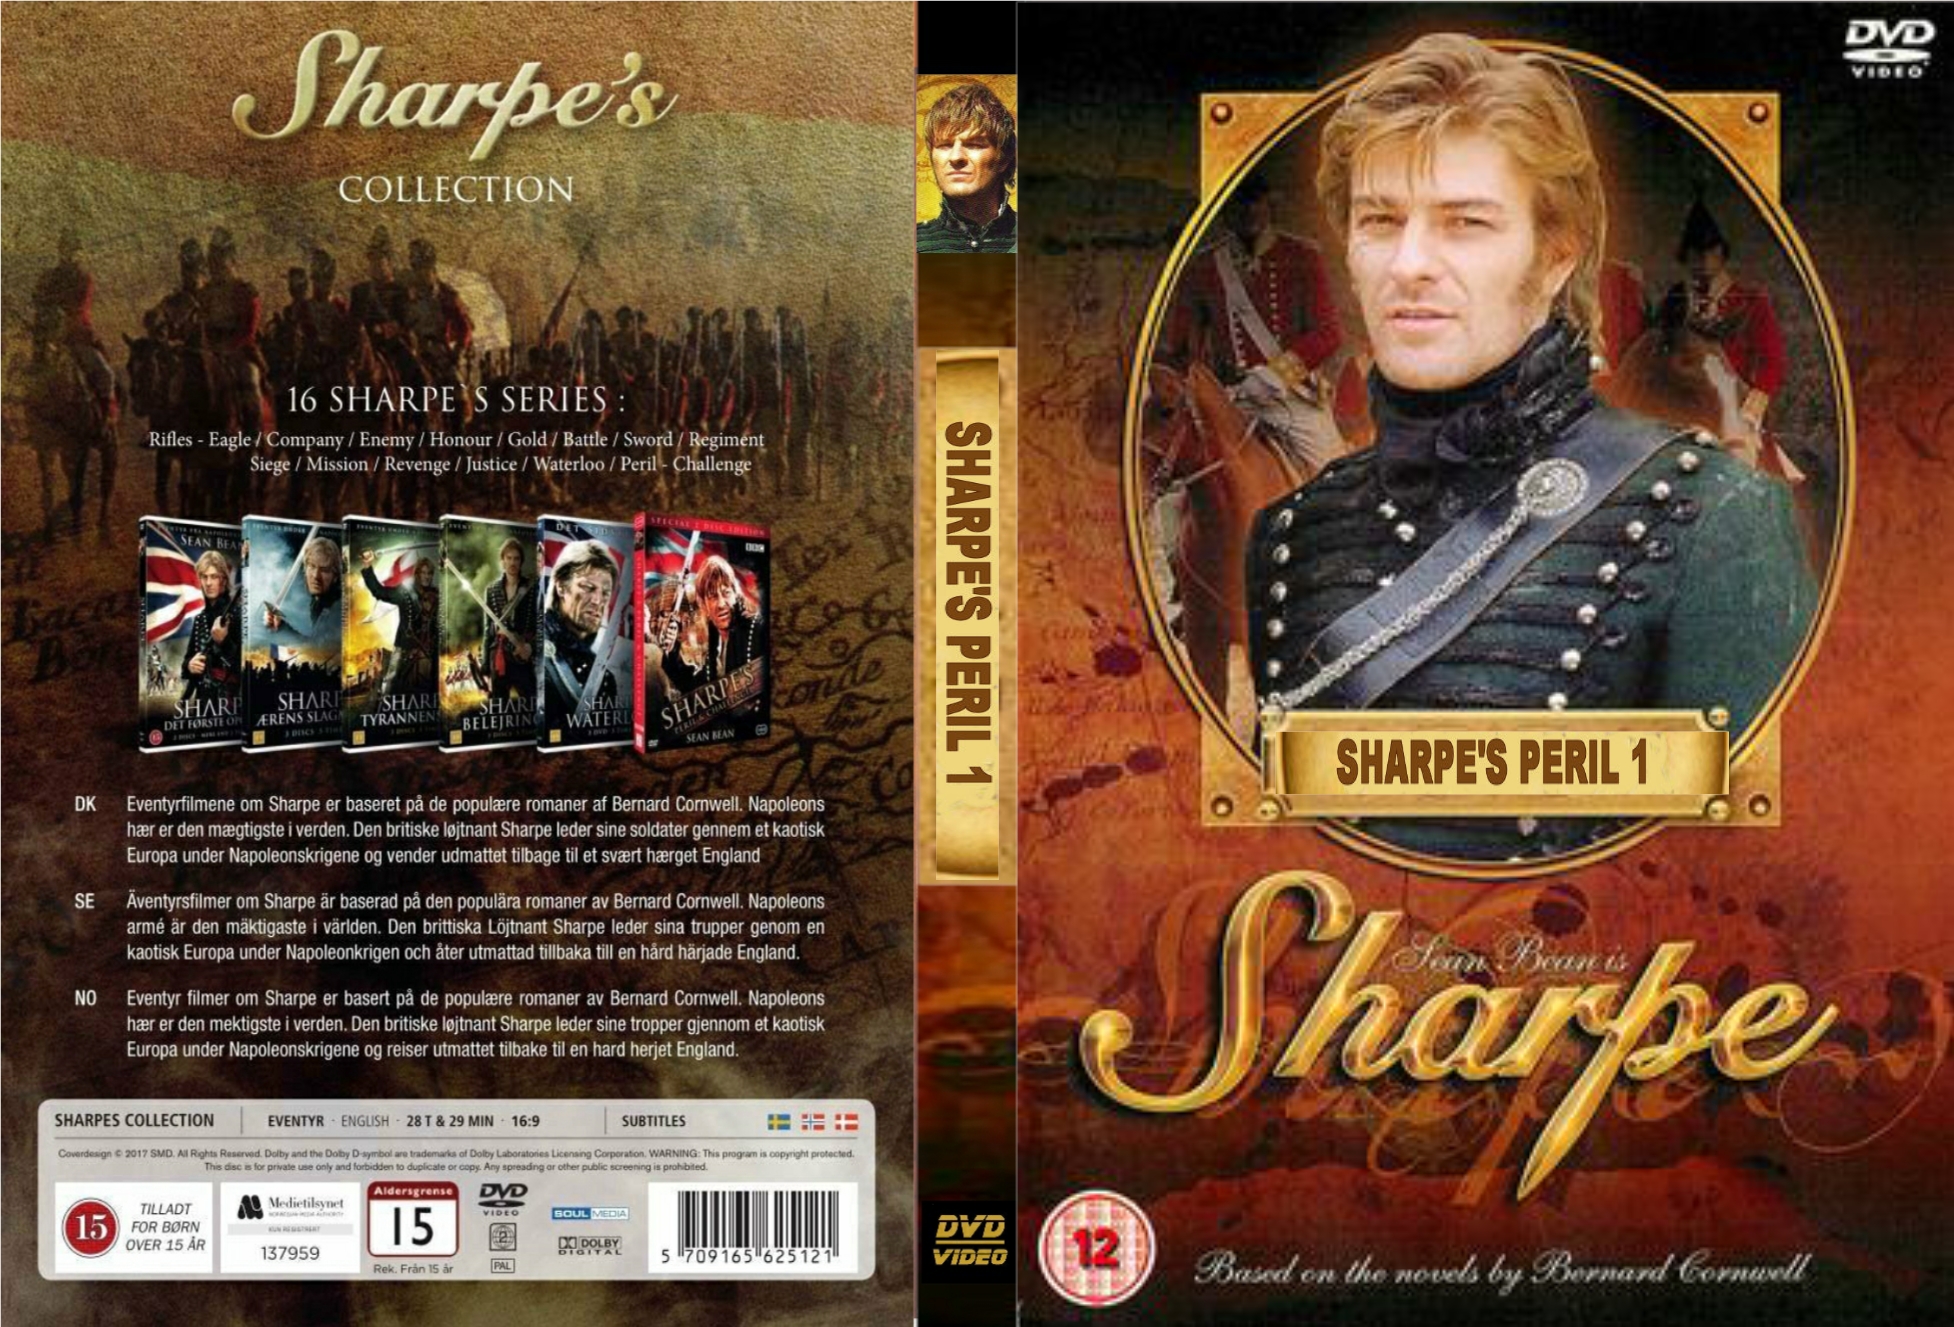 Sharpe's Peril (1) - DvD 17